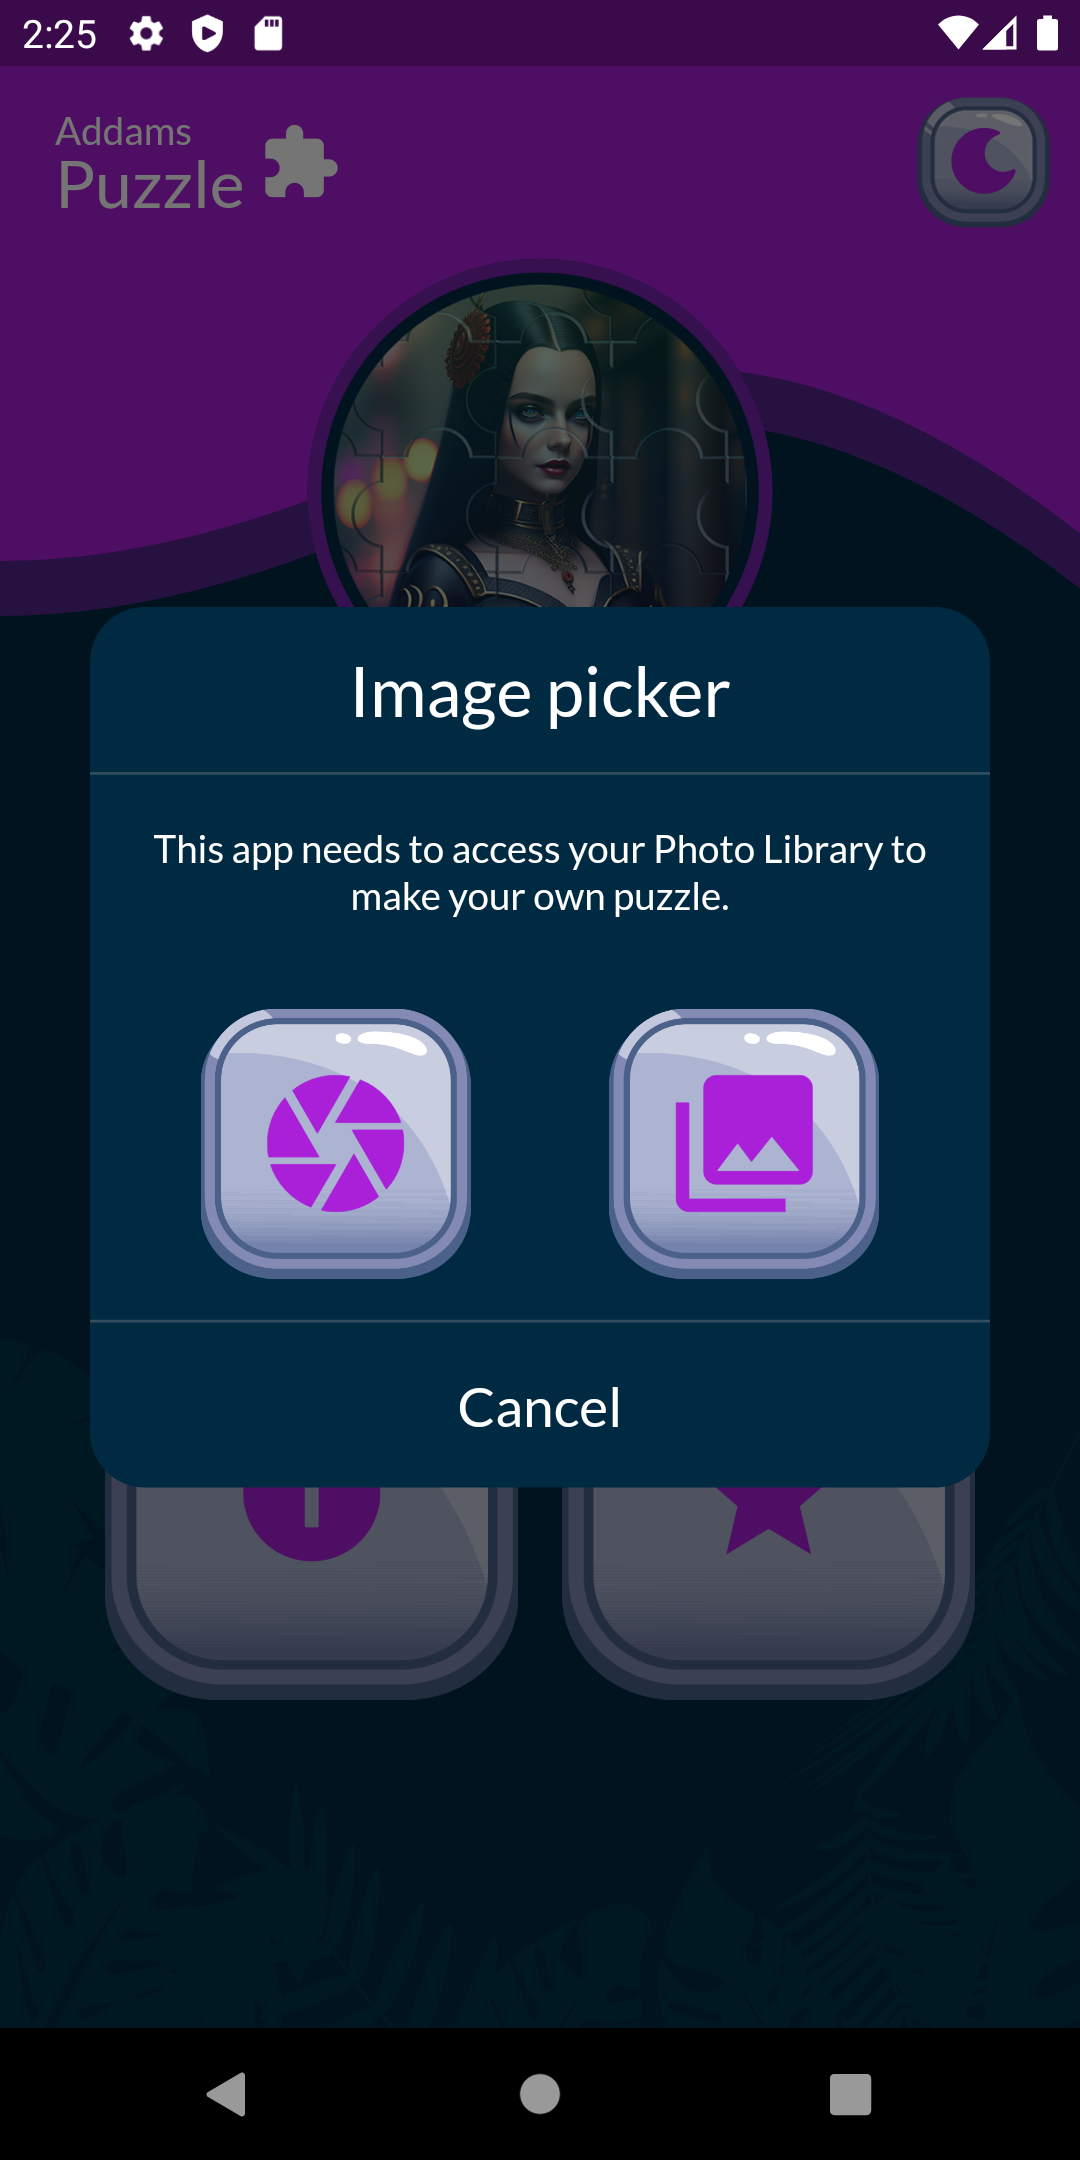 Puzzle du mercredi Addams version mobile Android iOS télécharger